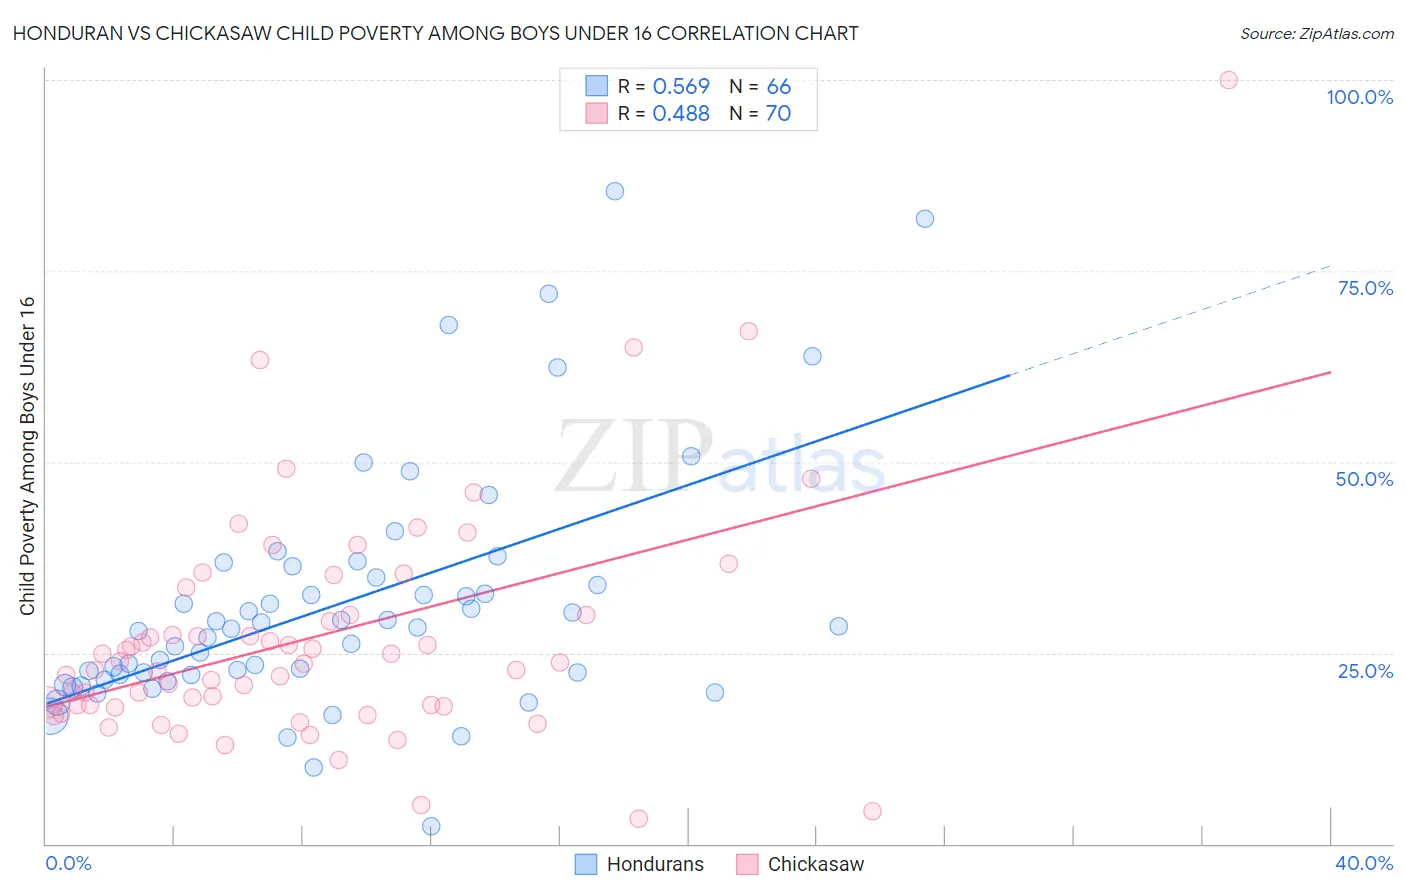 Honduran vs Chickasaw Child Poverty Among Boys Under 16